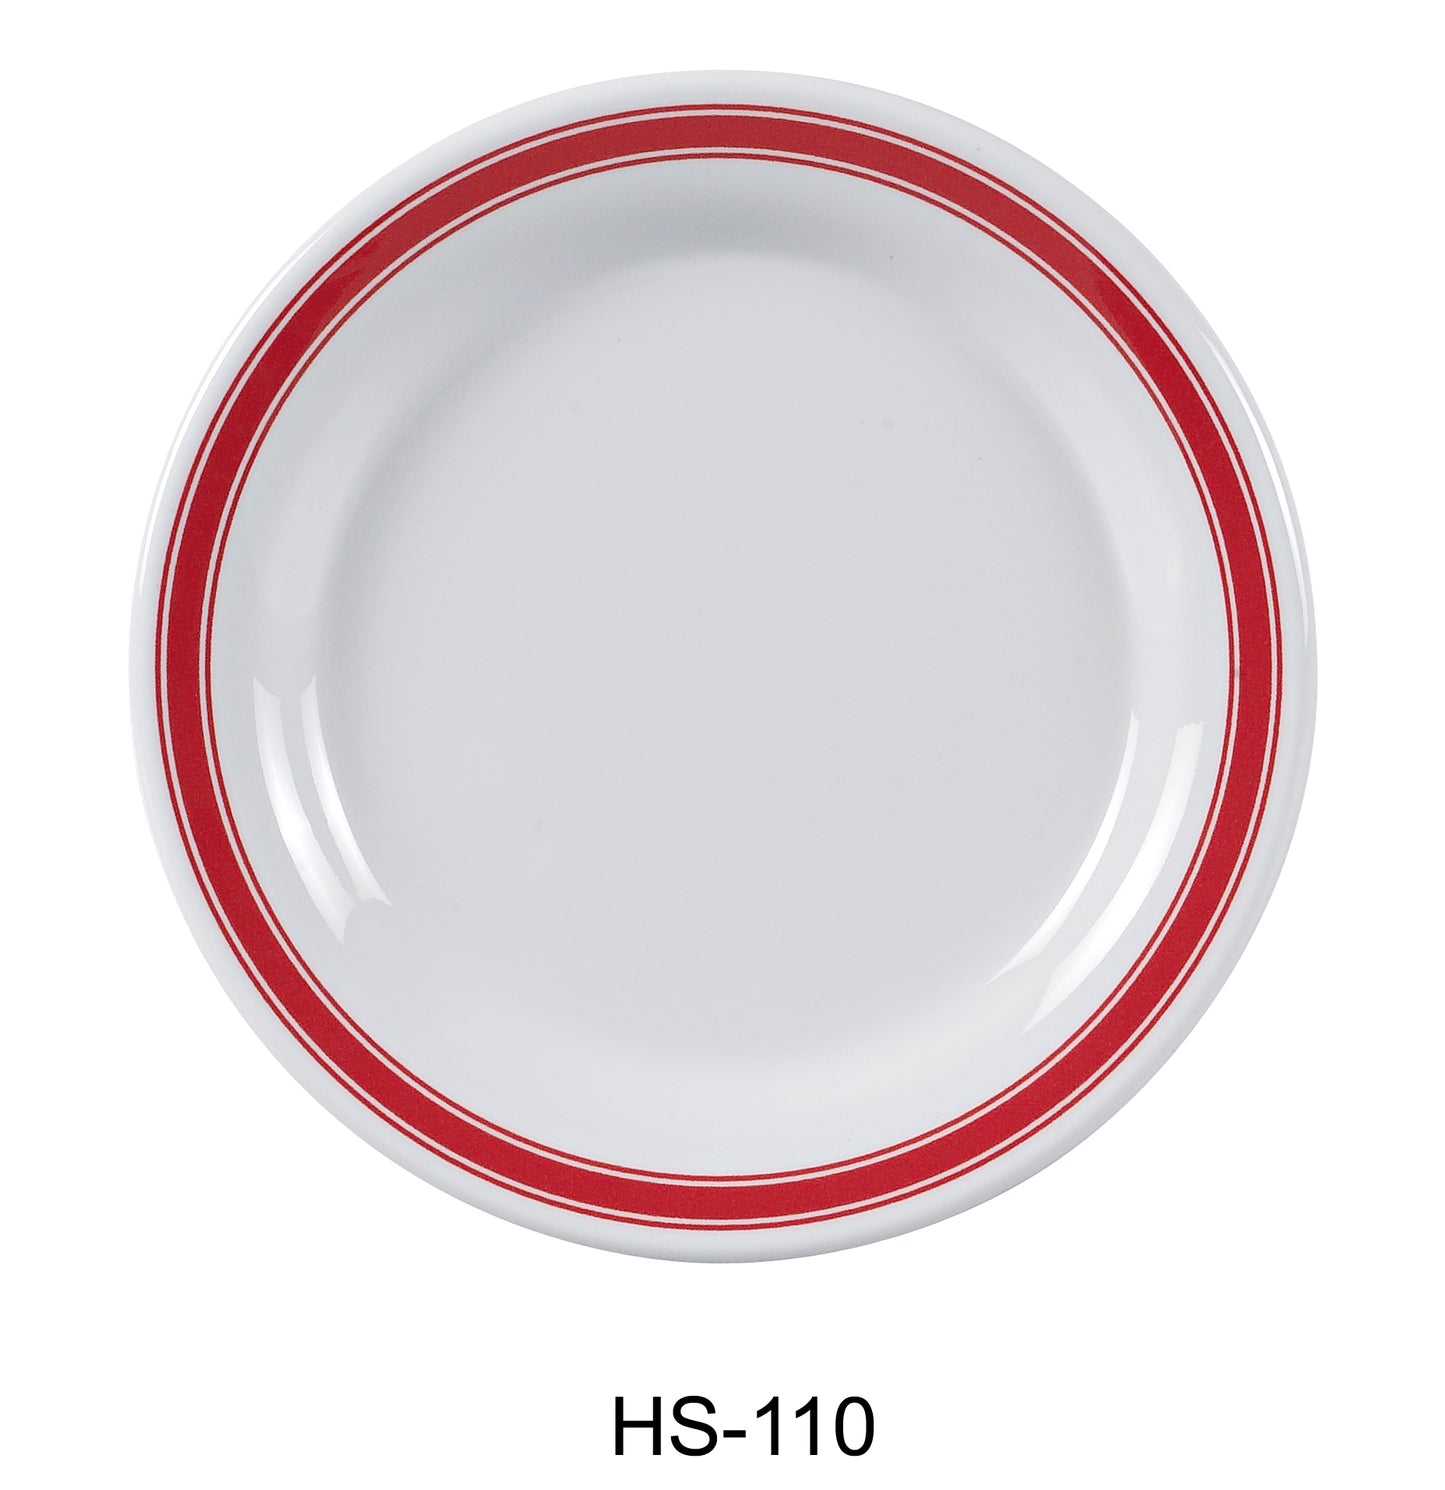 Yanco HS-110 Houston Round Plate